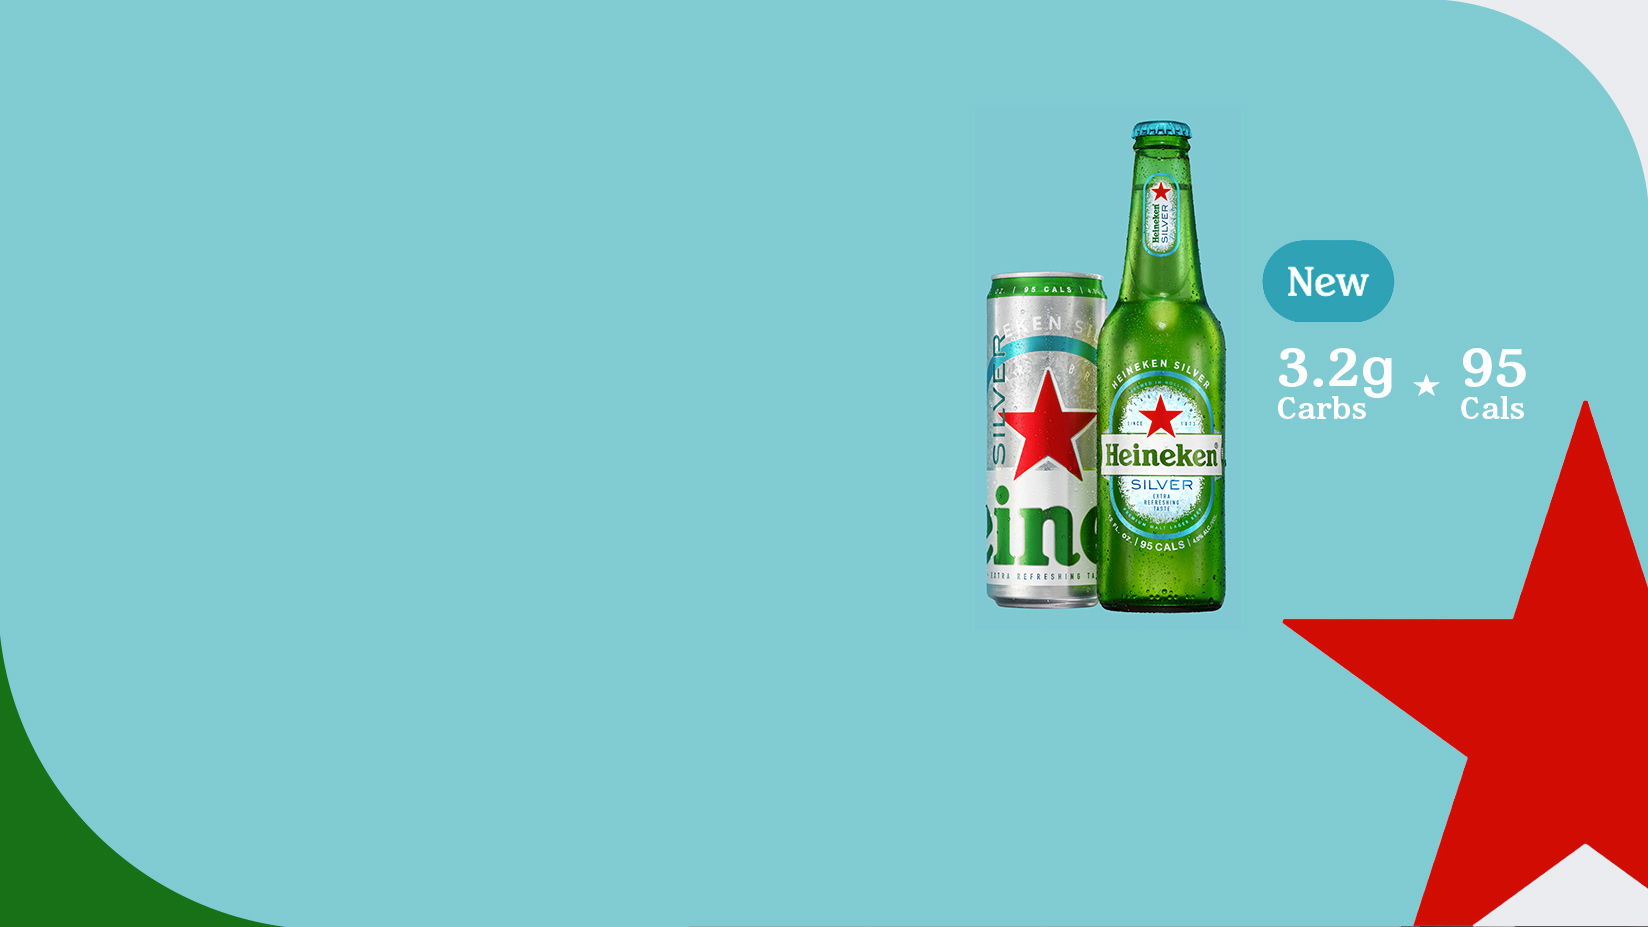 Heineken logo (91370) Free AI, EPS Download / 4 Vector